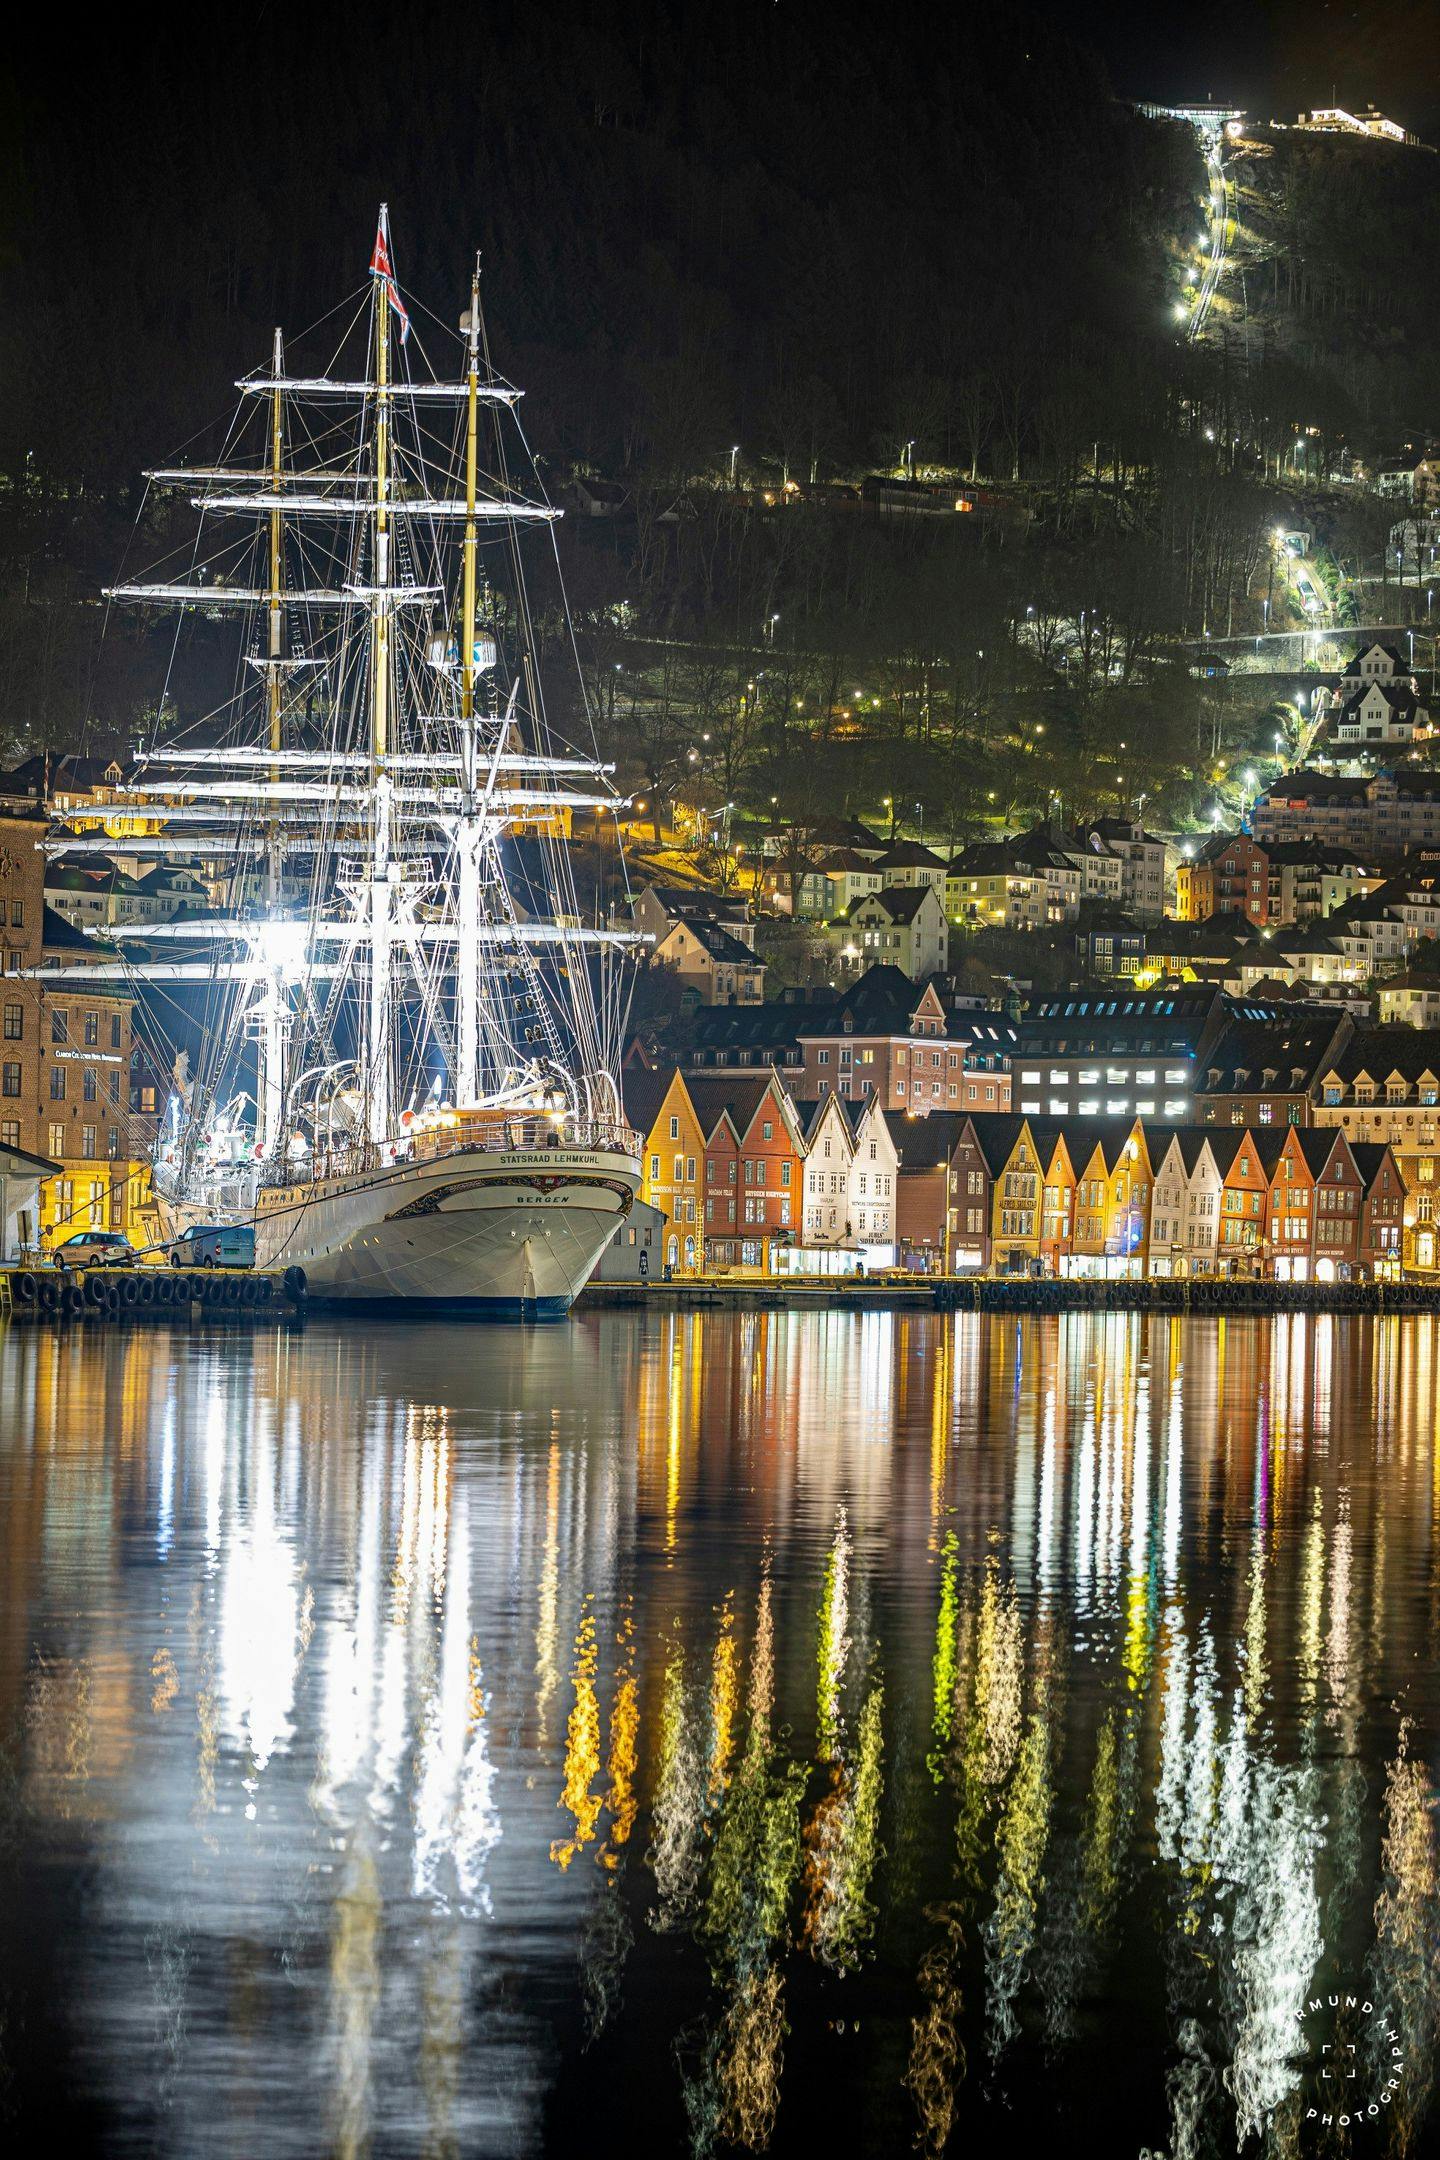 Statsraad Lehmkuhl at her home port in Bergen. Norway. Photo: Gjermundphotography